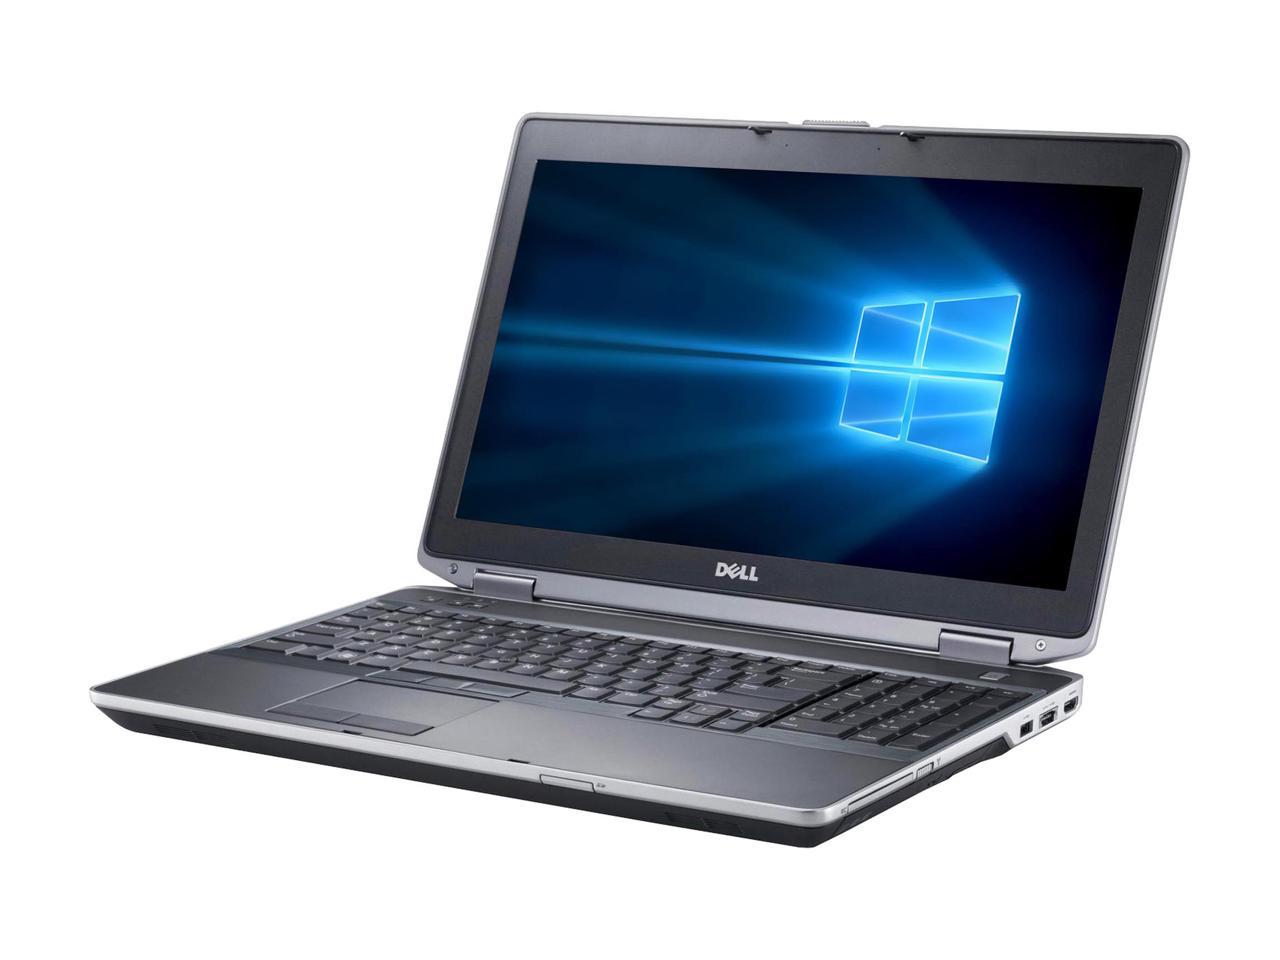 Refurbished Dell Latitude E6530 15.6" Intel Core i5-3210M 2.50 GHz 4 GB DDR3 120 GB SSD DVD Windows 10 Pro 64-bit 1 Year Warranty